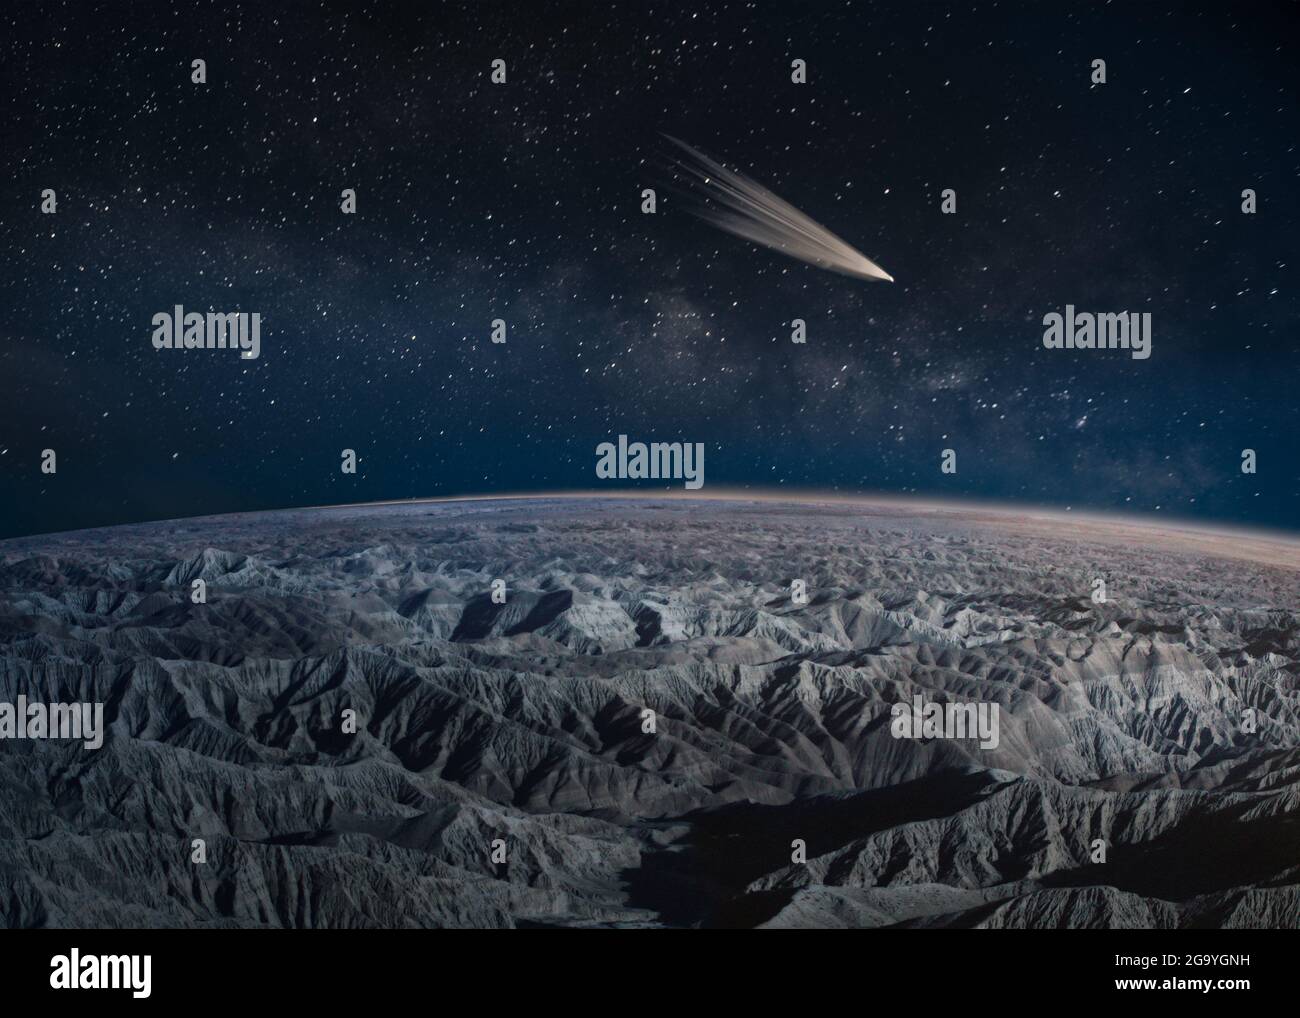 Comet passing over desert badlands, California, USA Stock Photo